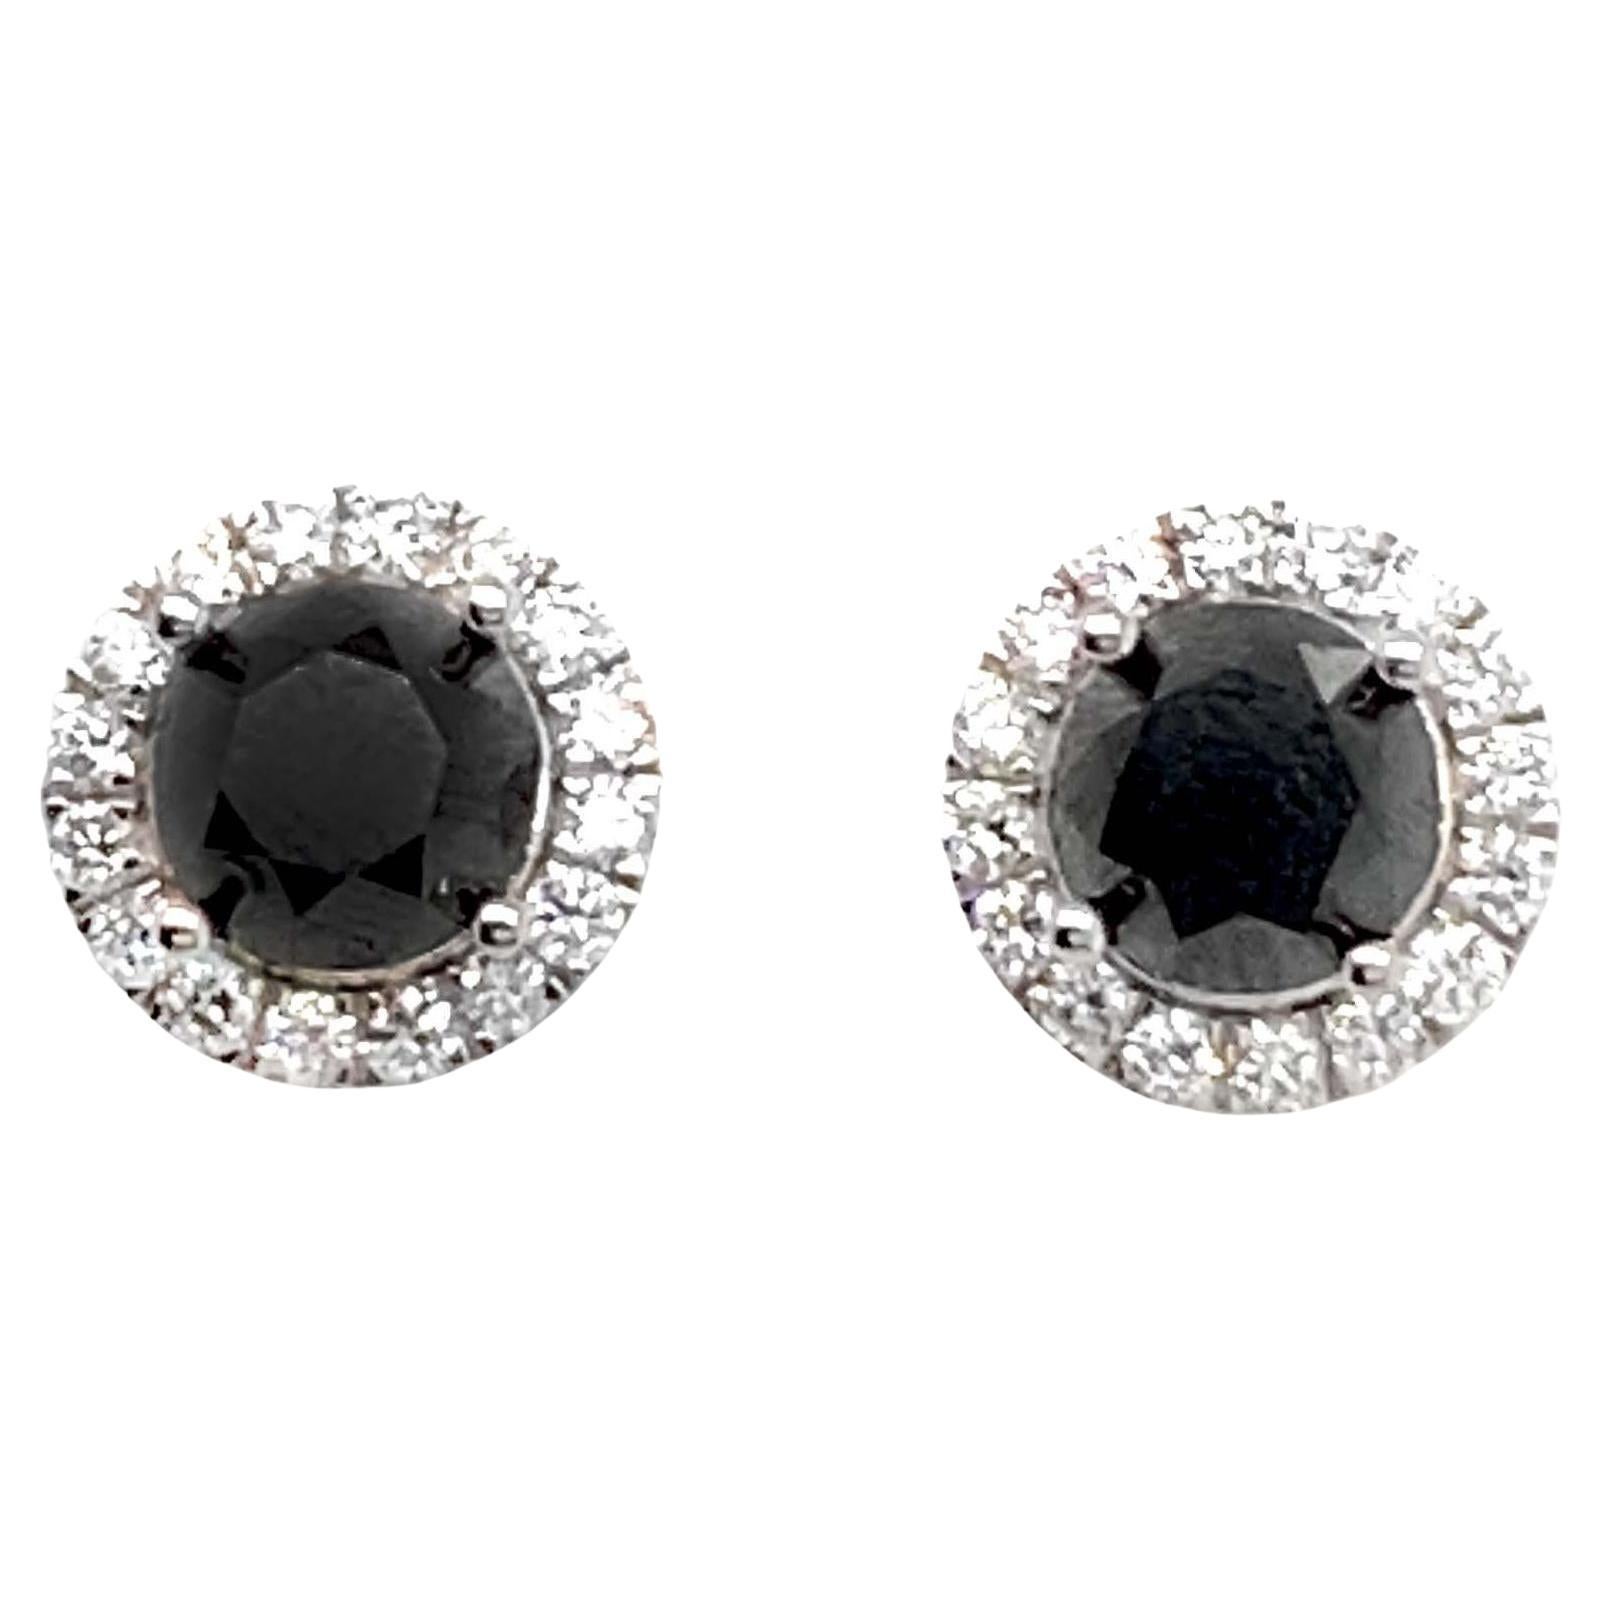 4 Carat Black Diamond Earring Studs For Sale